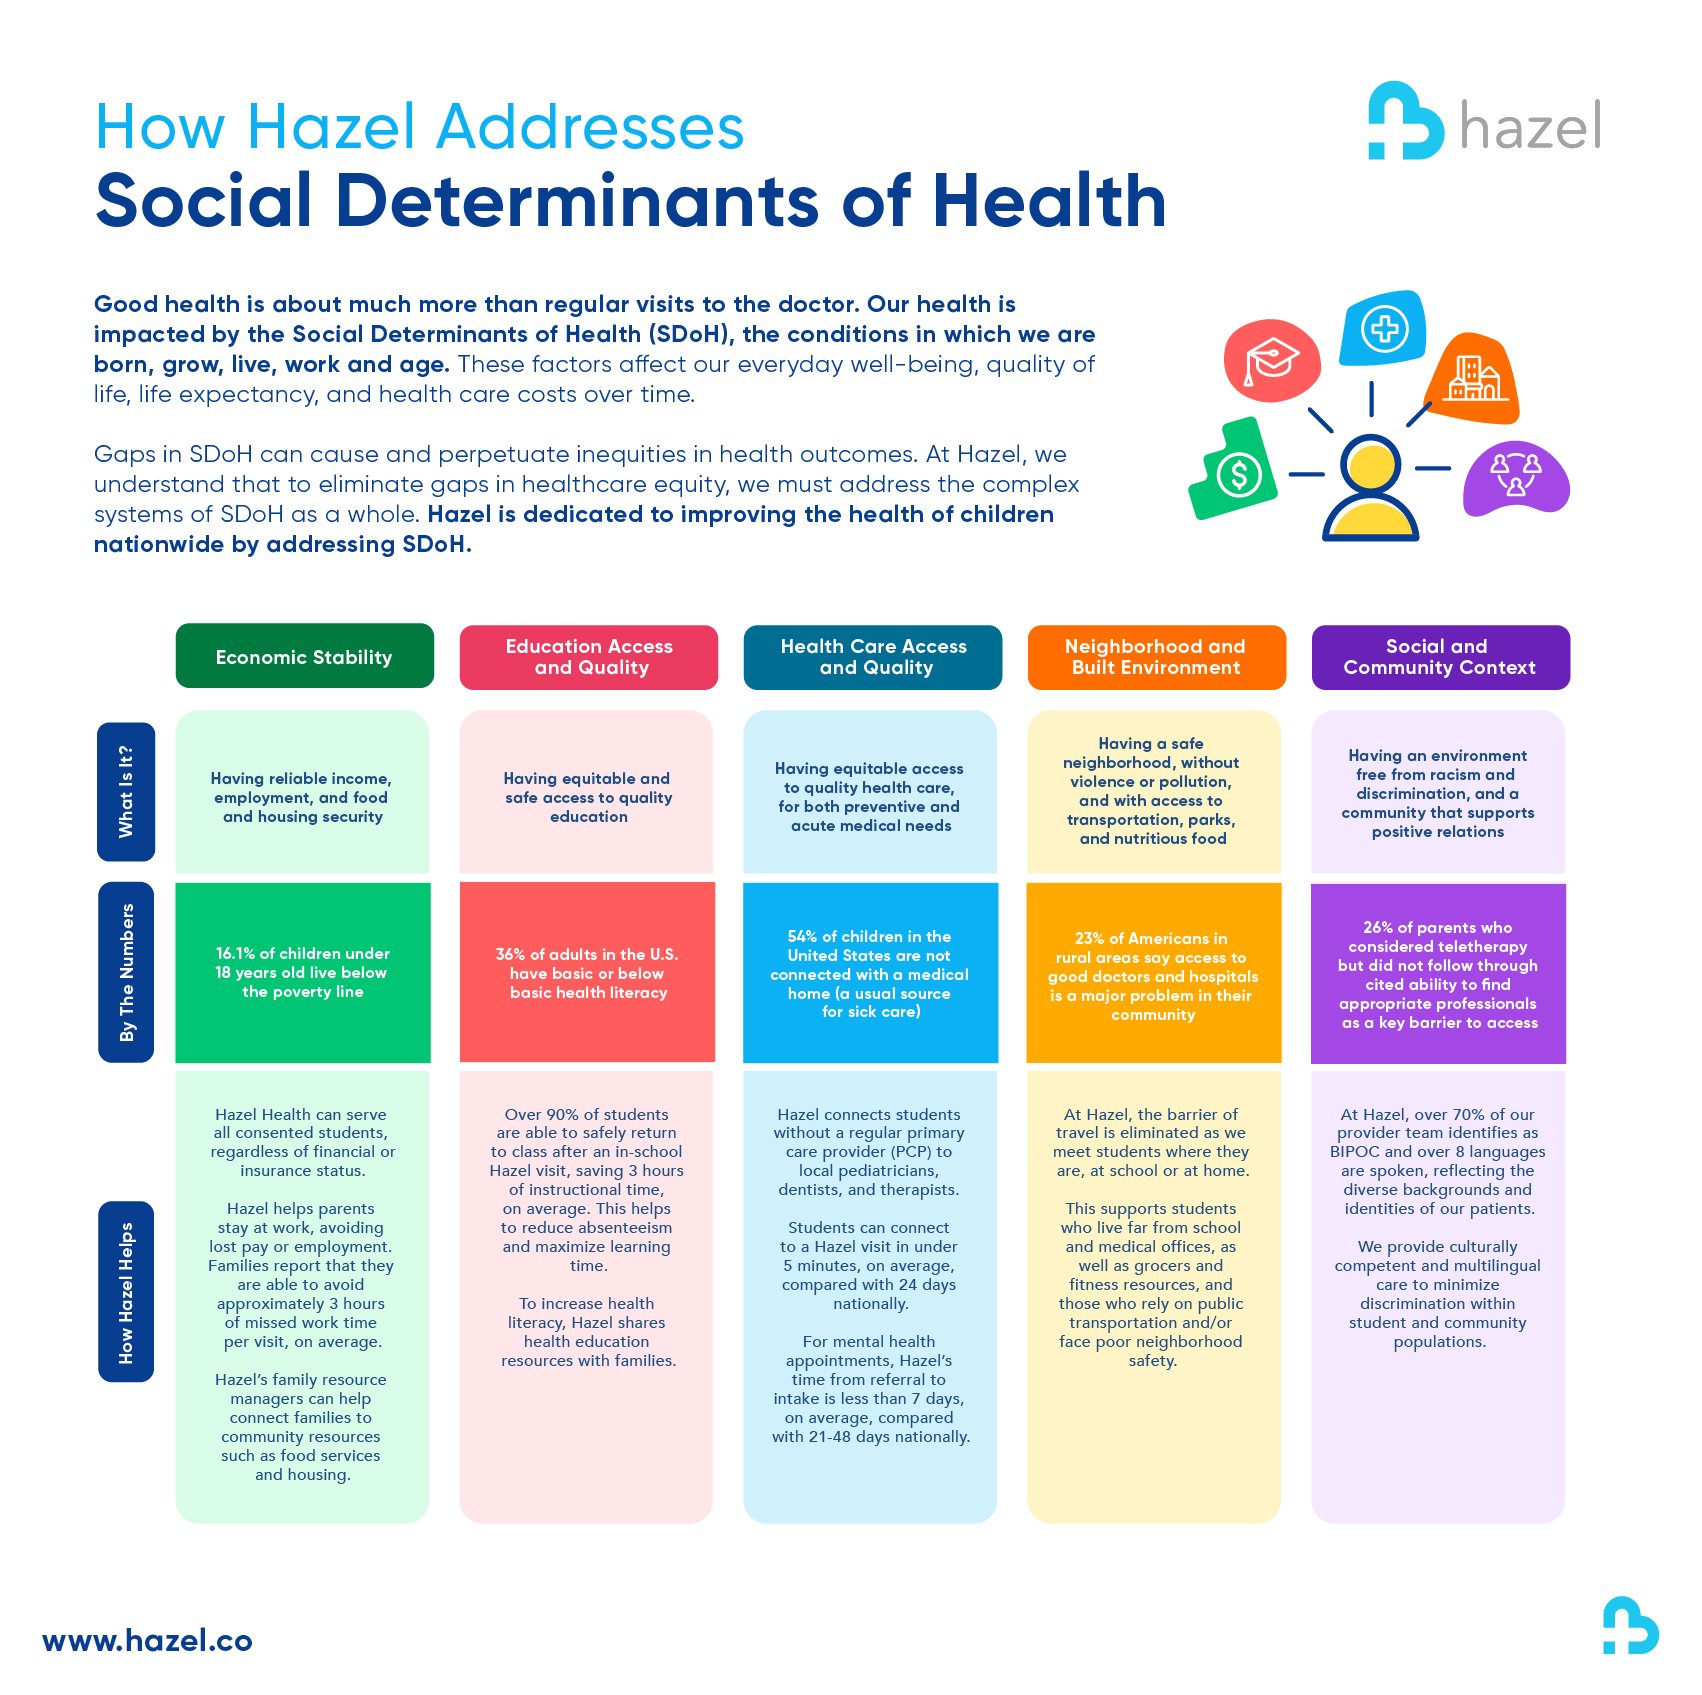 social determinants of health education essay